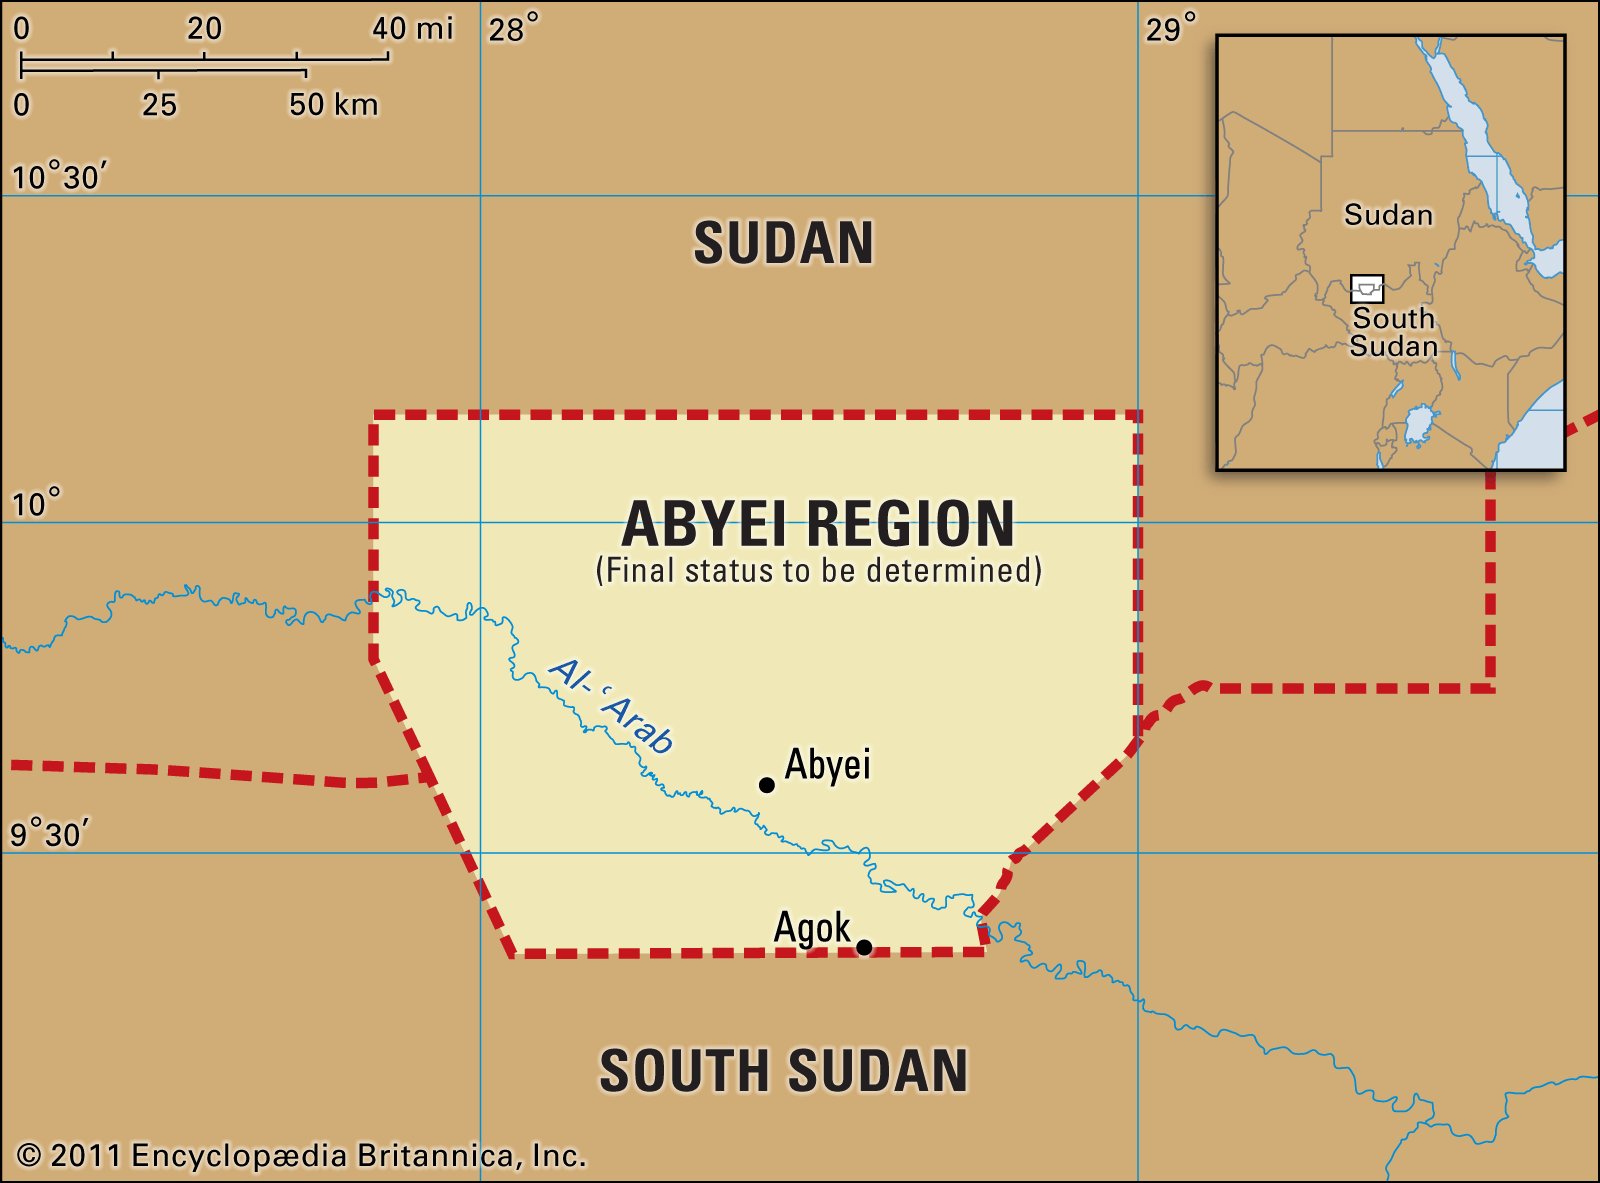 Juba, Khartoum recommit to implementing Abyei protocols